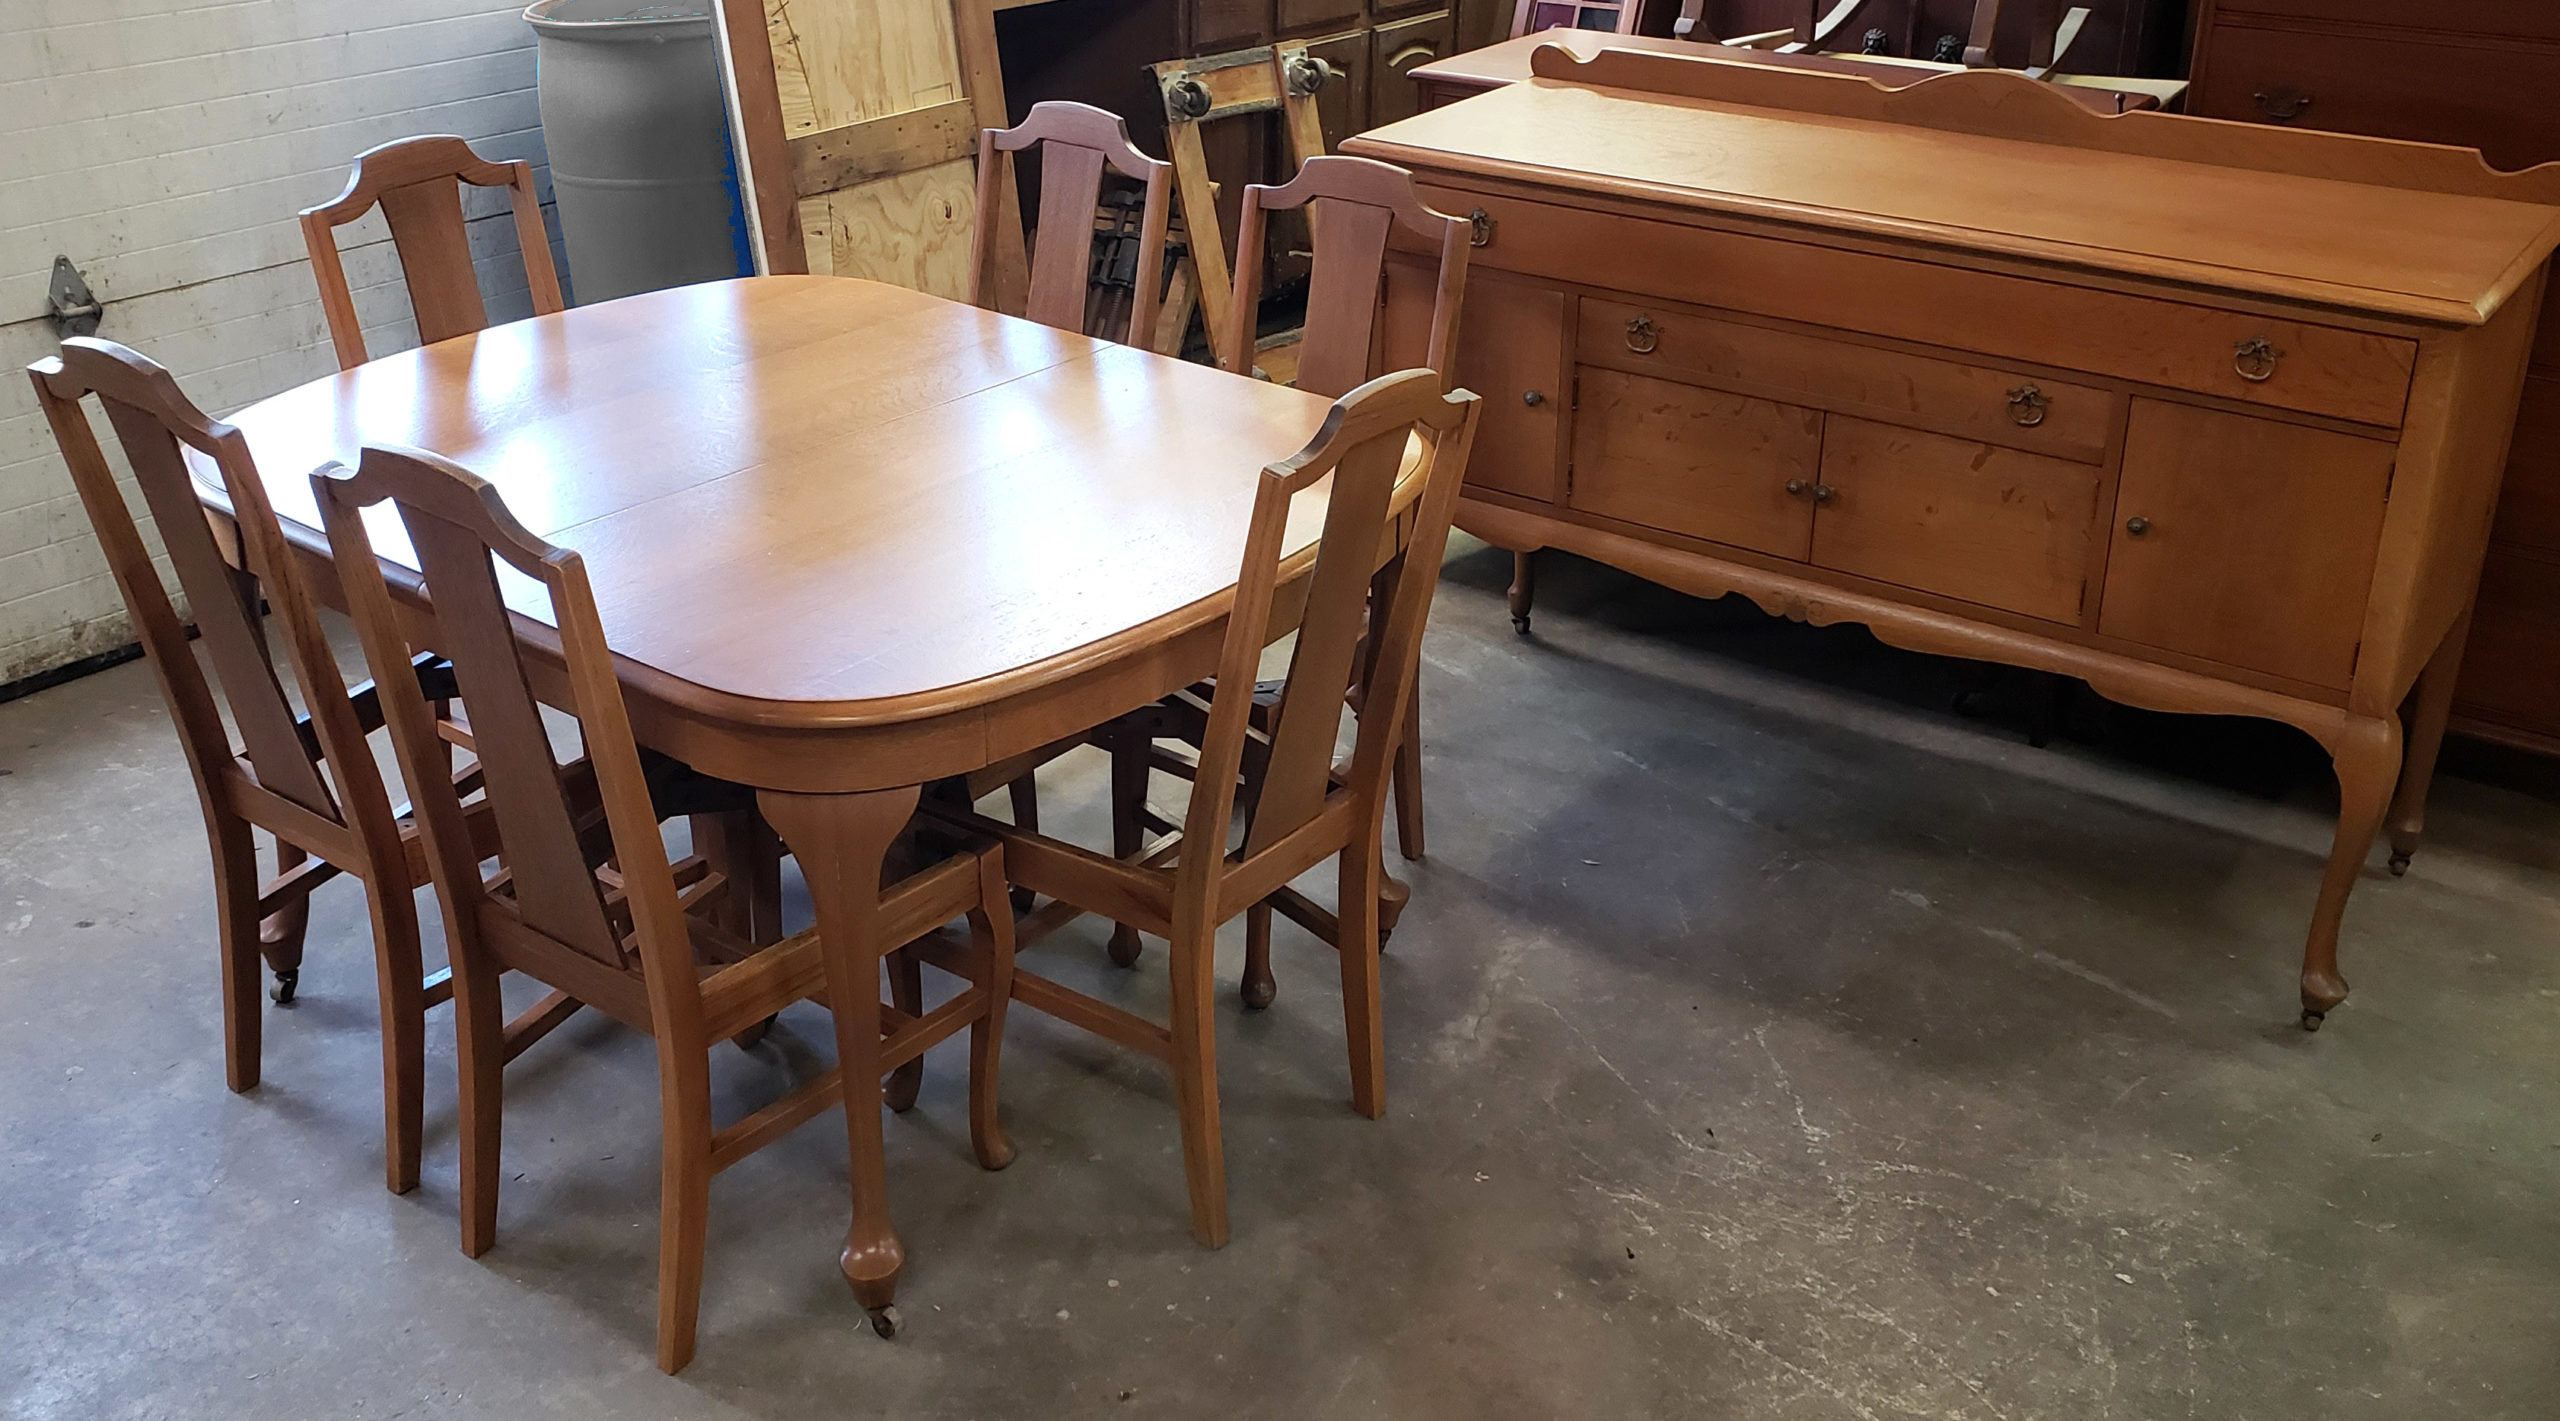 restore-it-furniture-restoration-reedsburg-baraboo-wisconsin-dells-wi-pic6